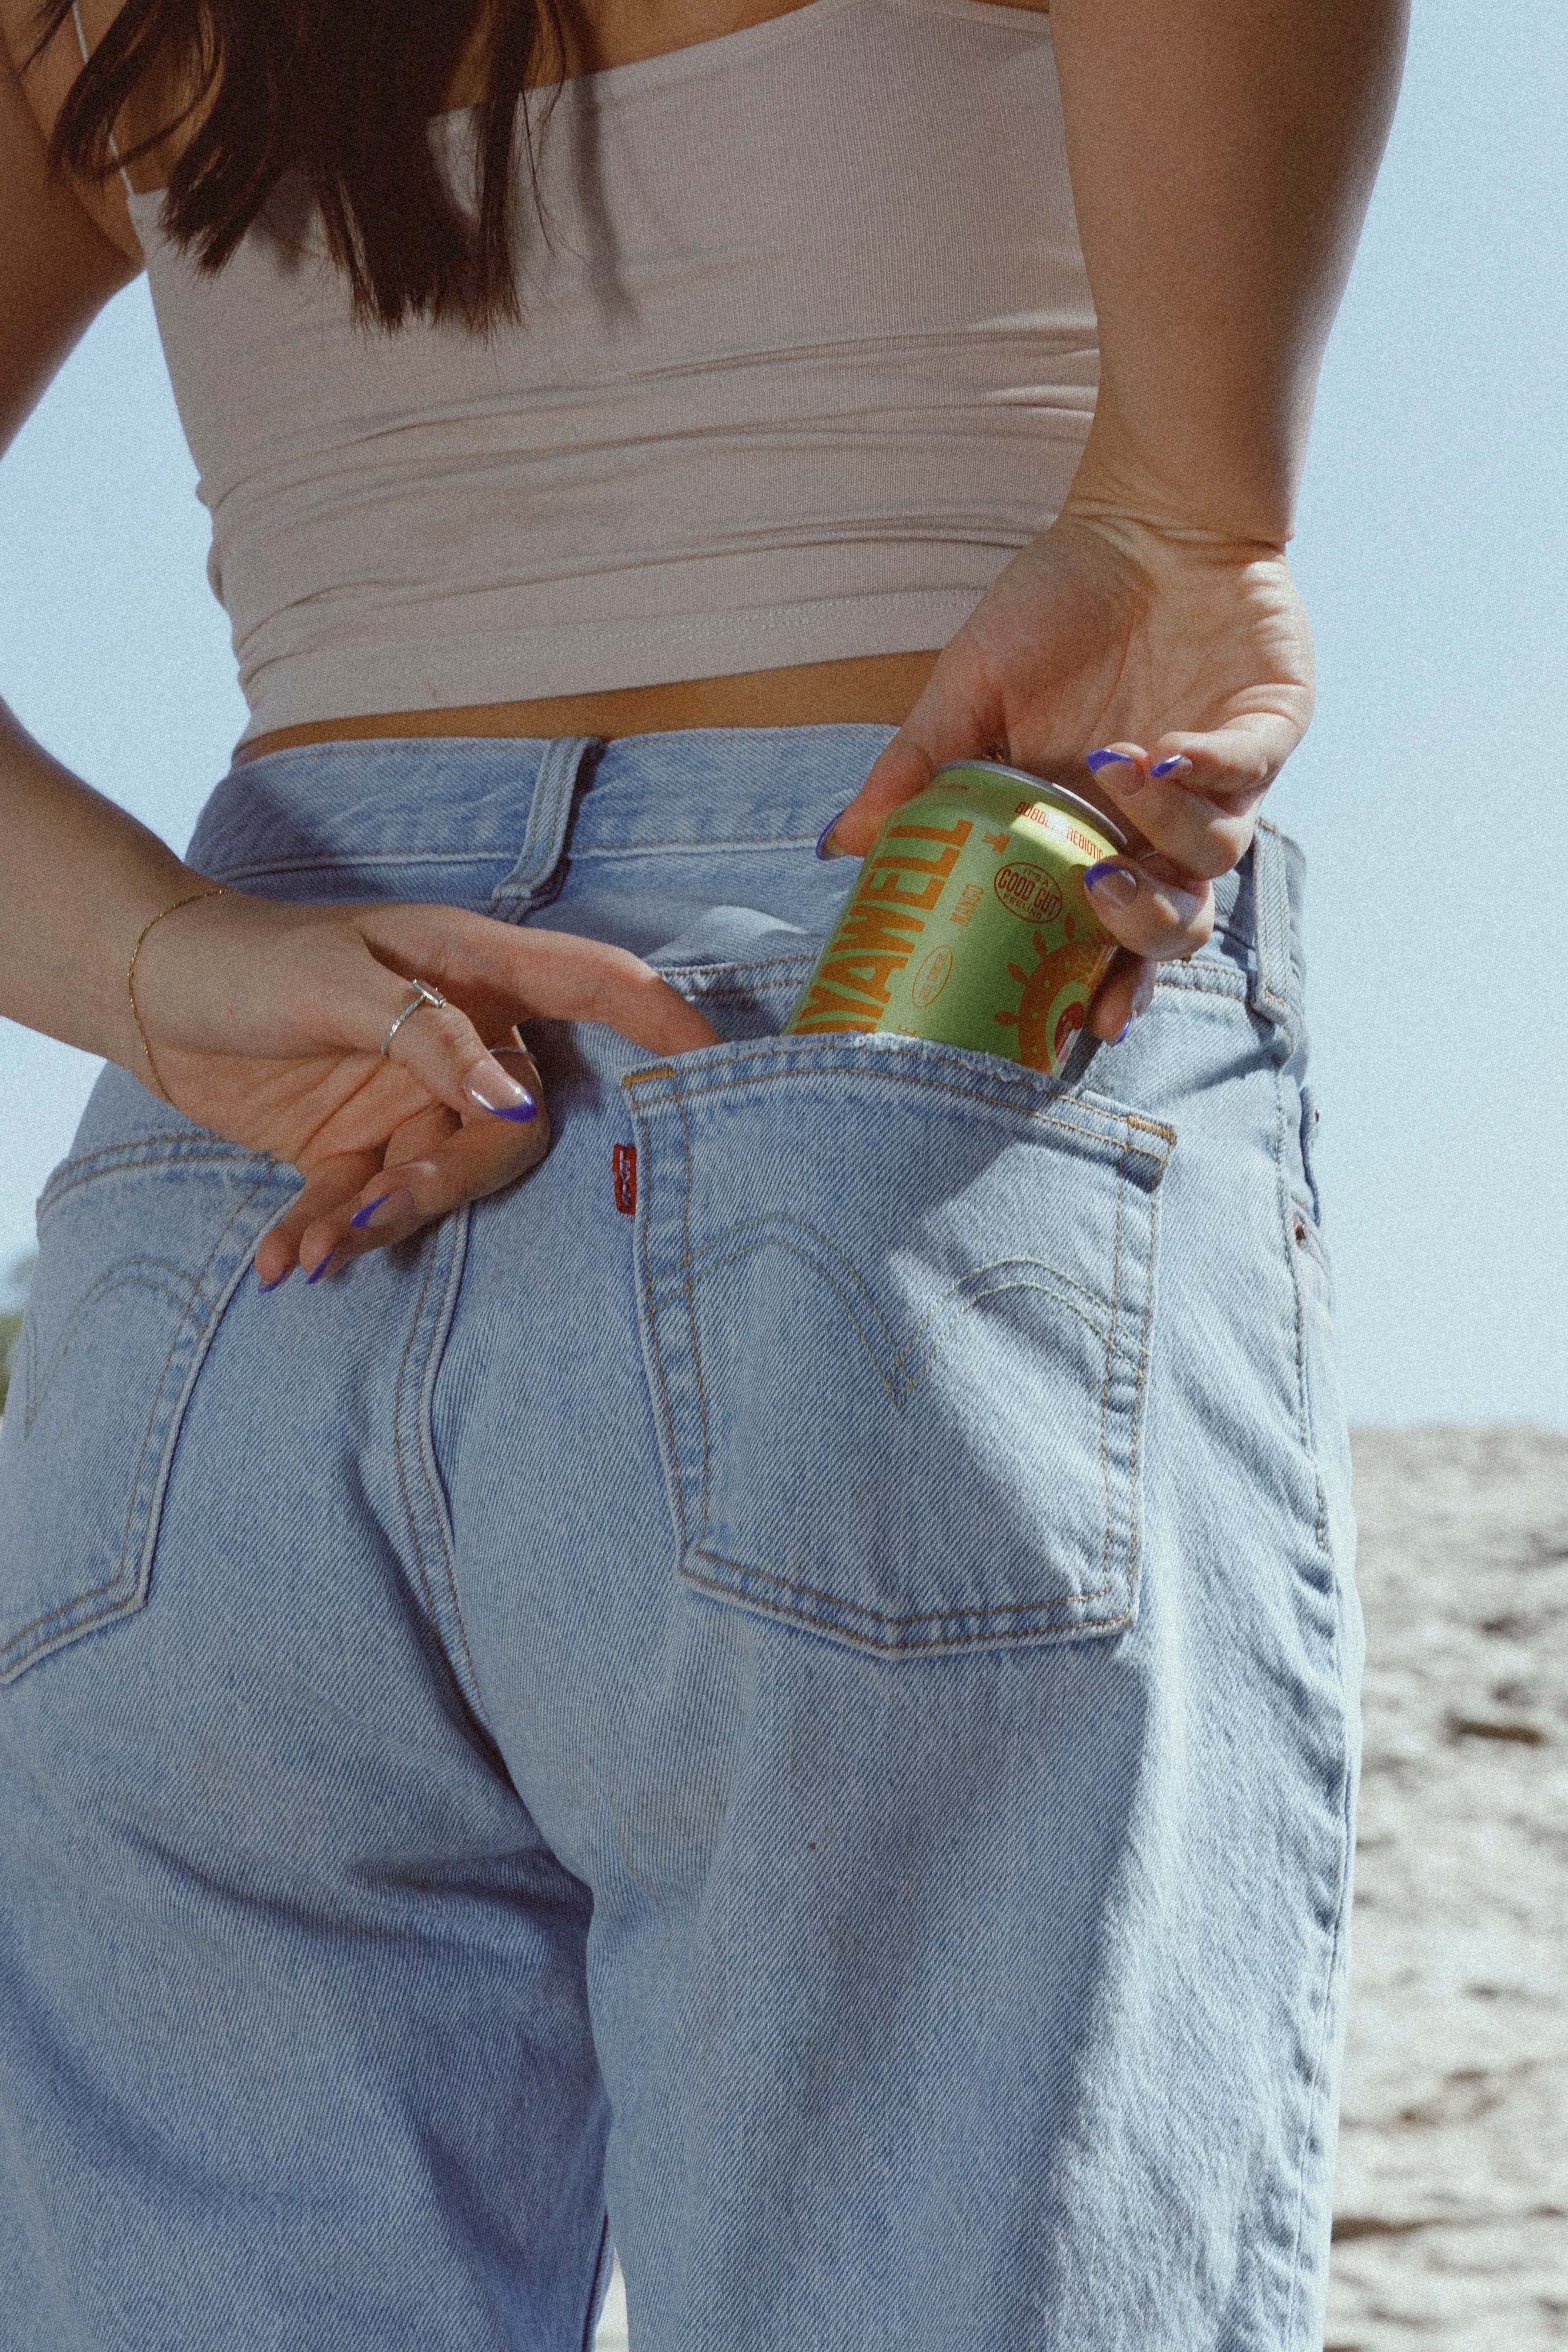 mayawell prebiotic soda in pocket